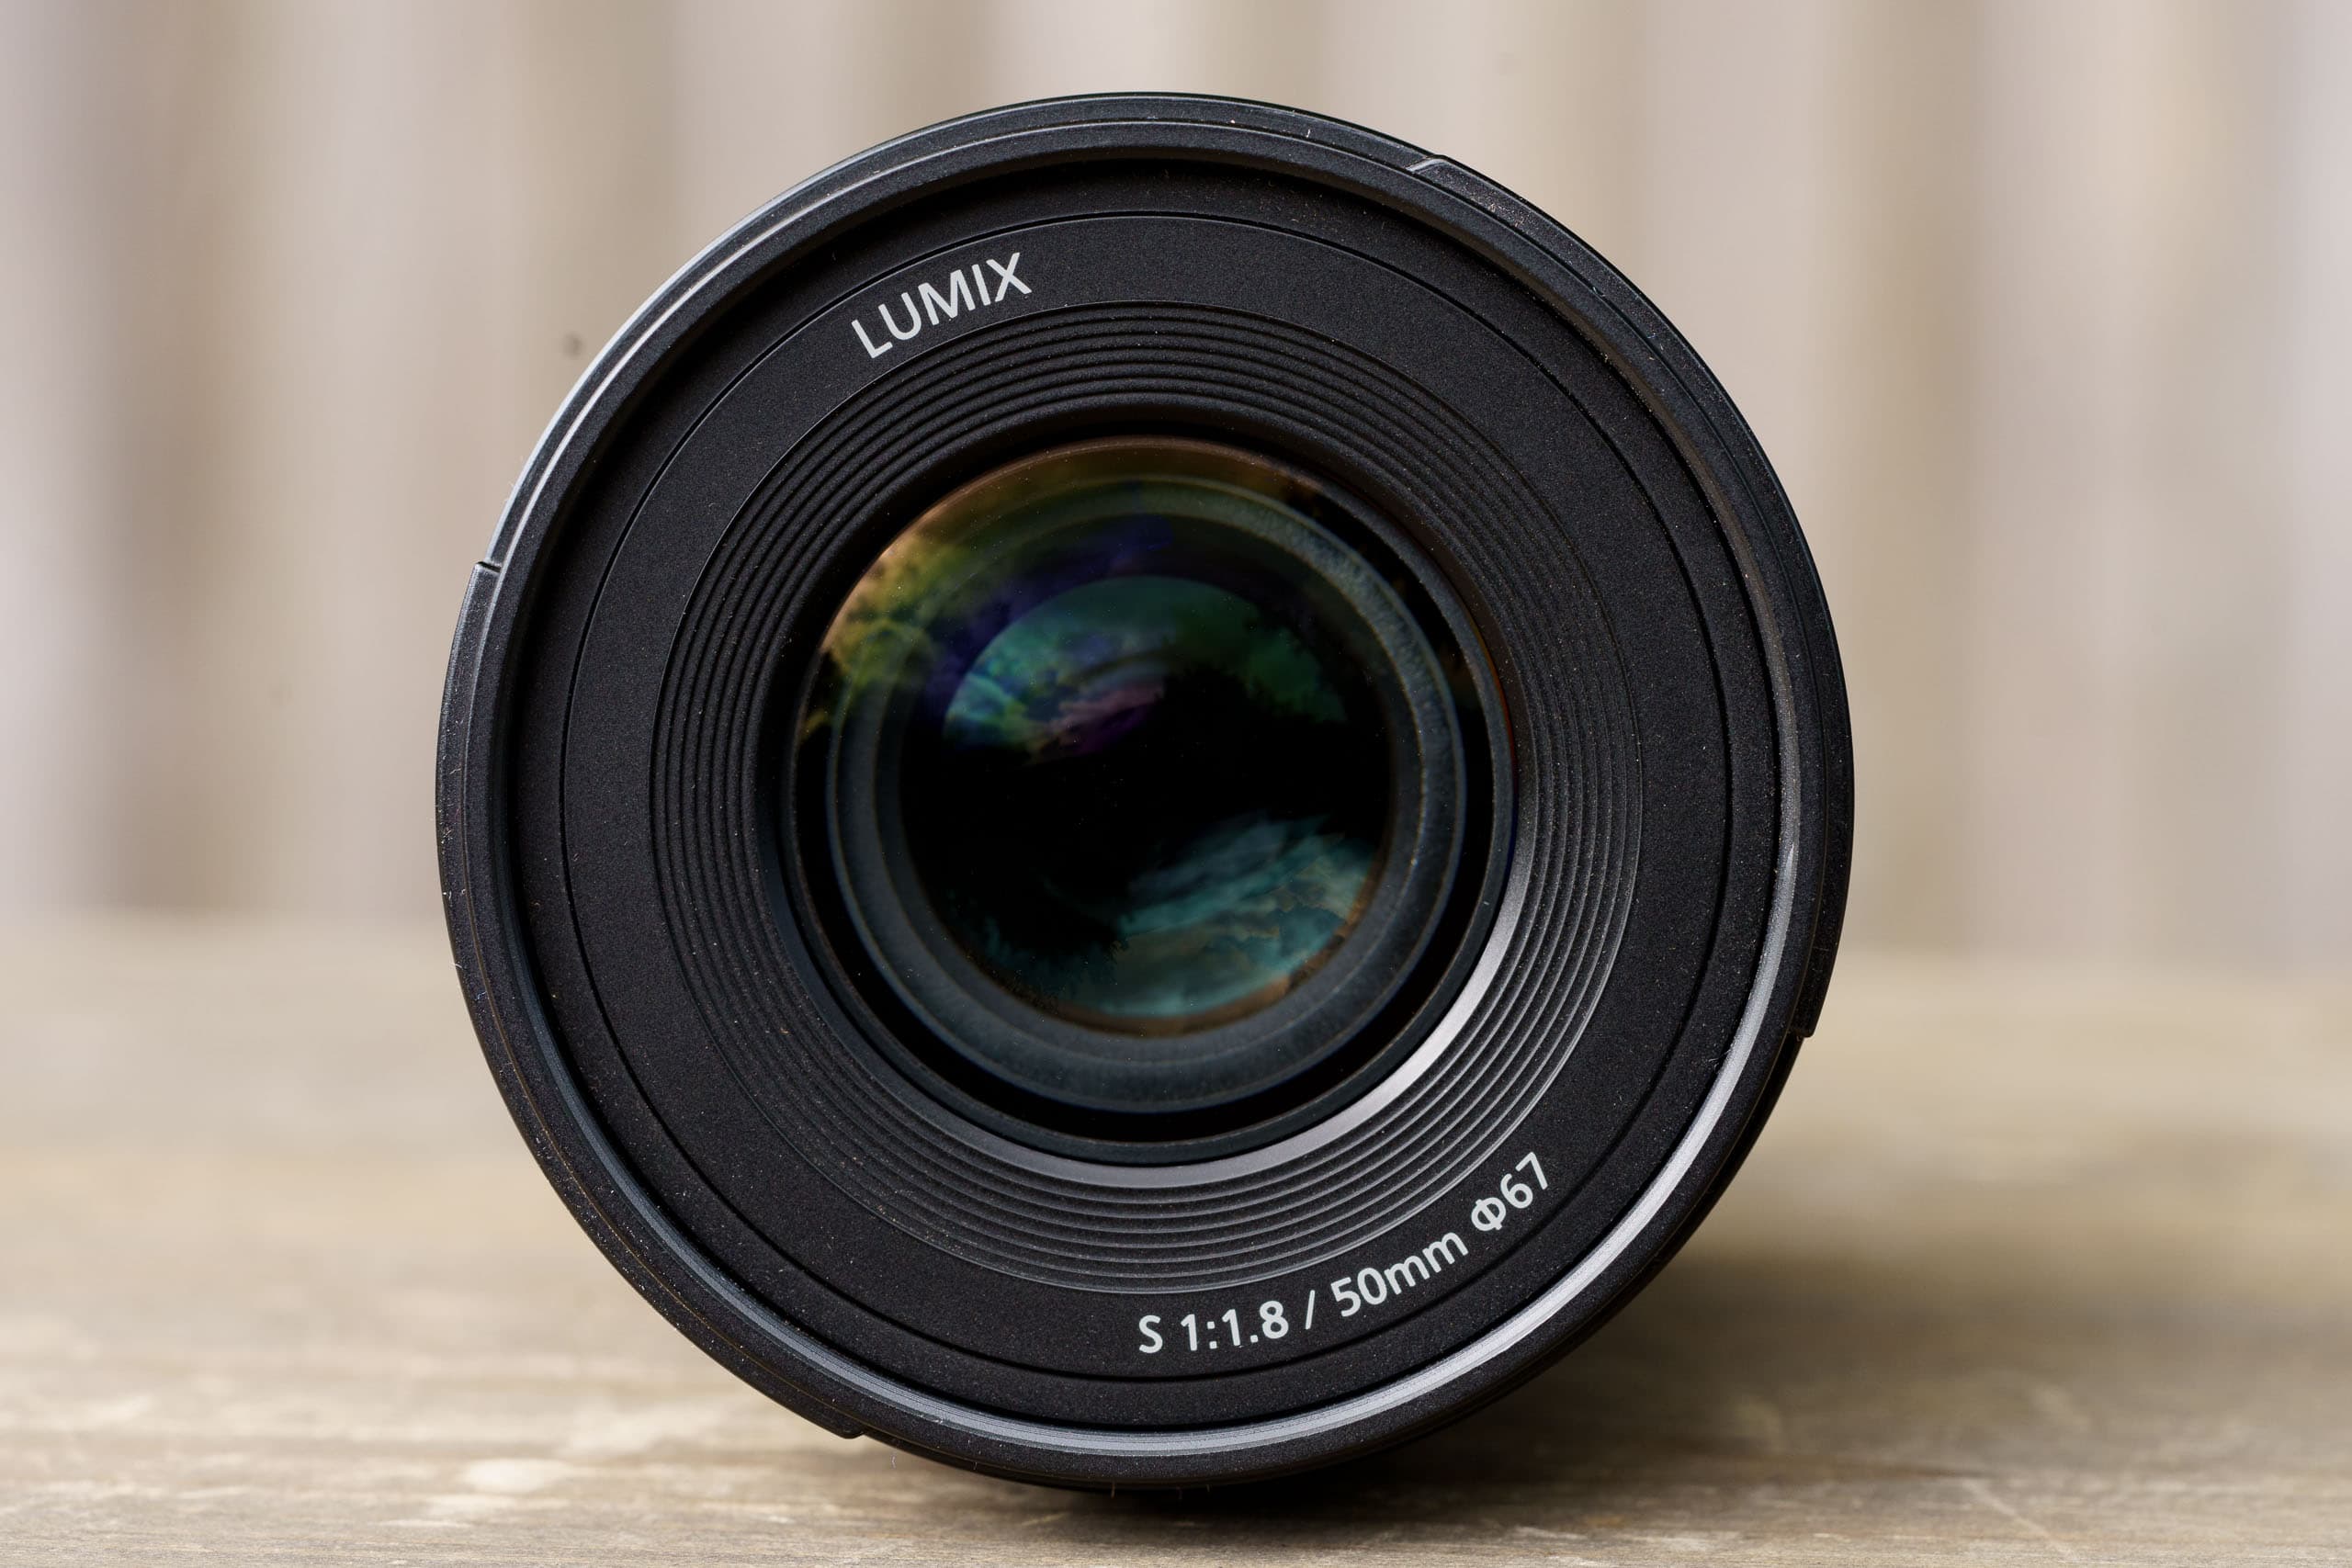 Panasonic Lumix S 50mm f/1.8 Lens Front